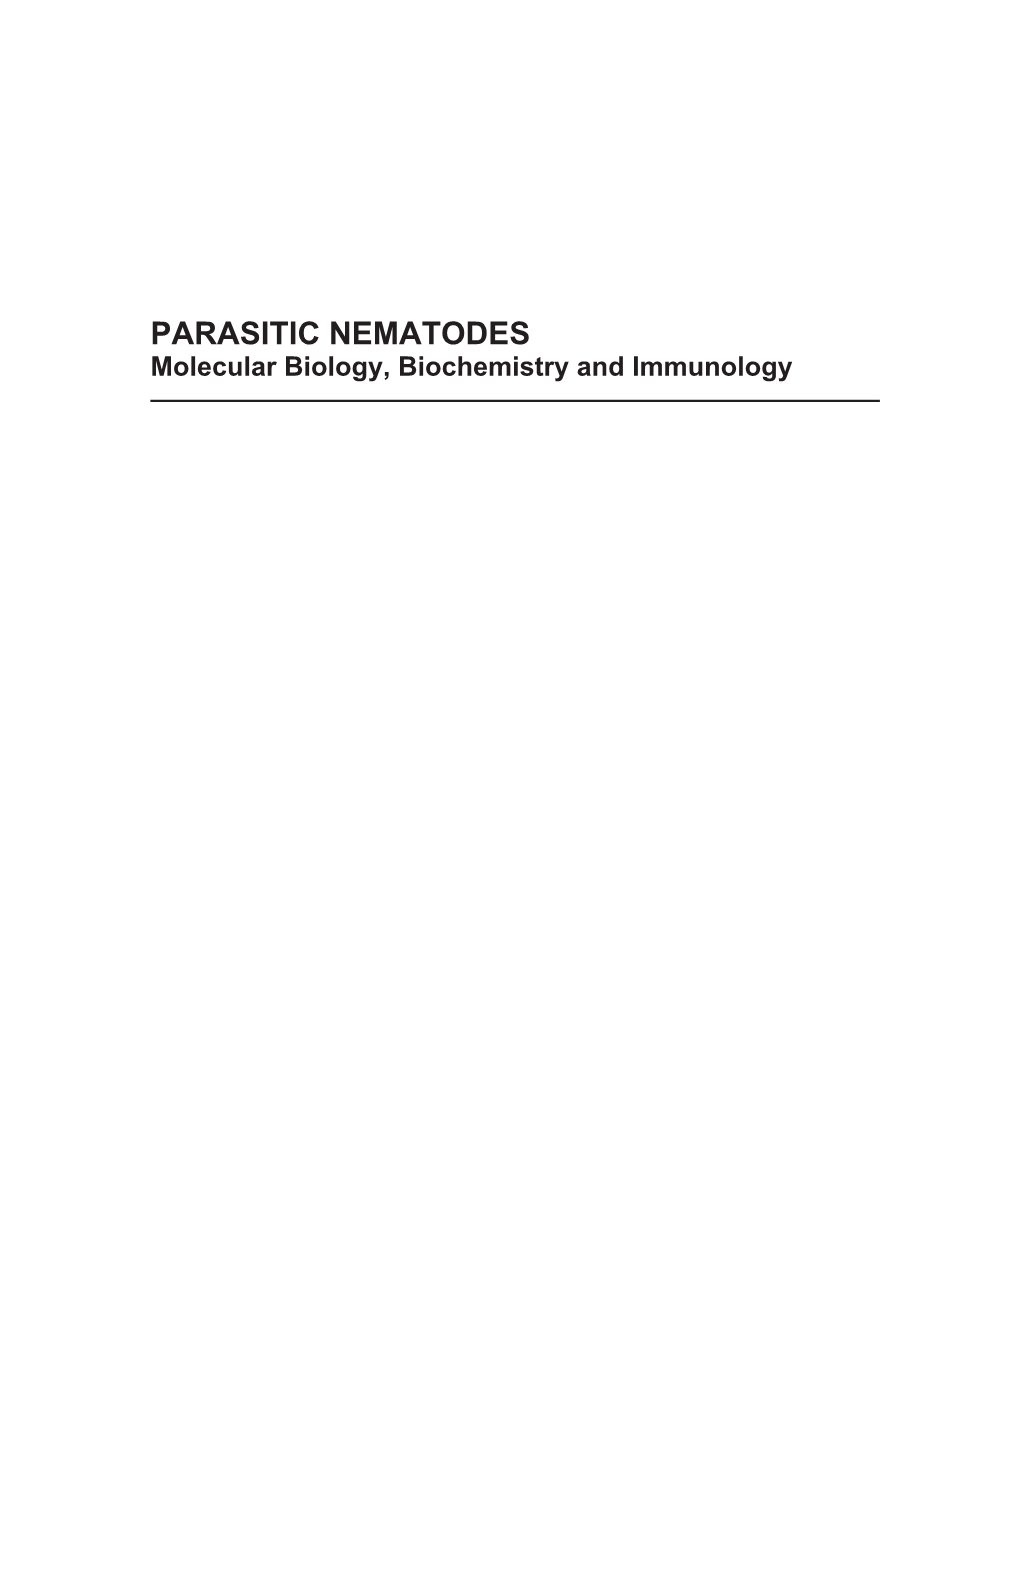 PARASITIC NEMATODES Molecular Biology, Biochemistry and Immunology